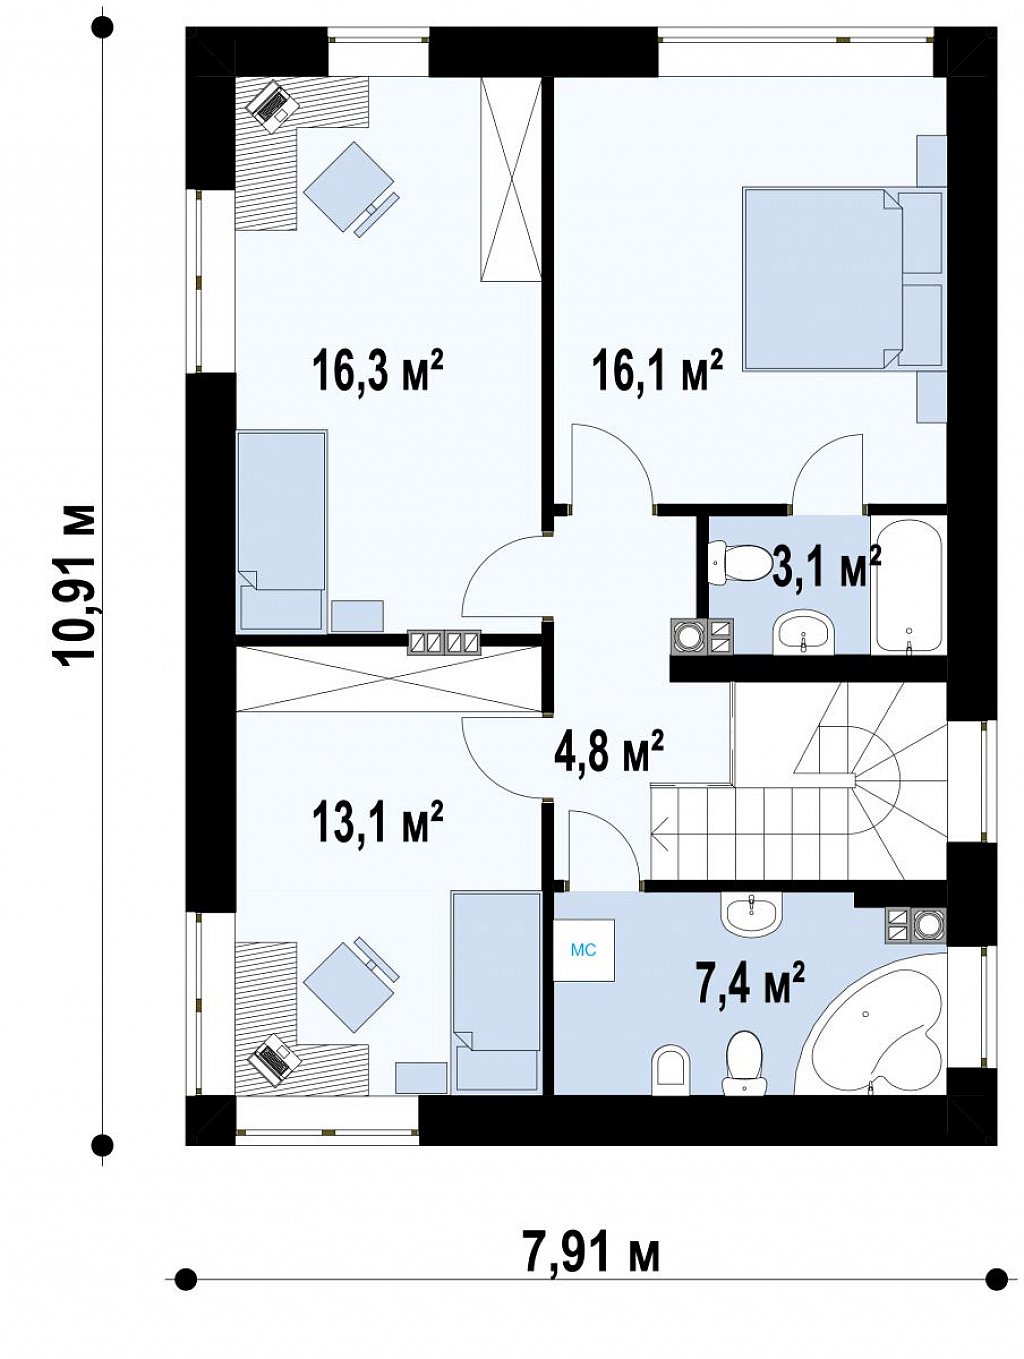 Вариант двухэтажного дома проекта Zz3 план помещений 2